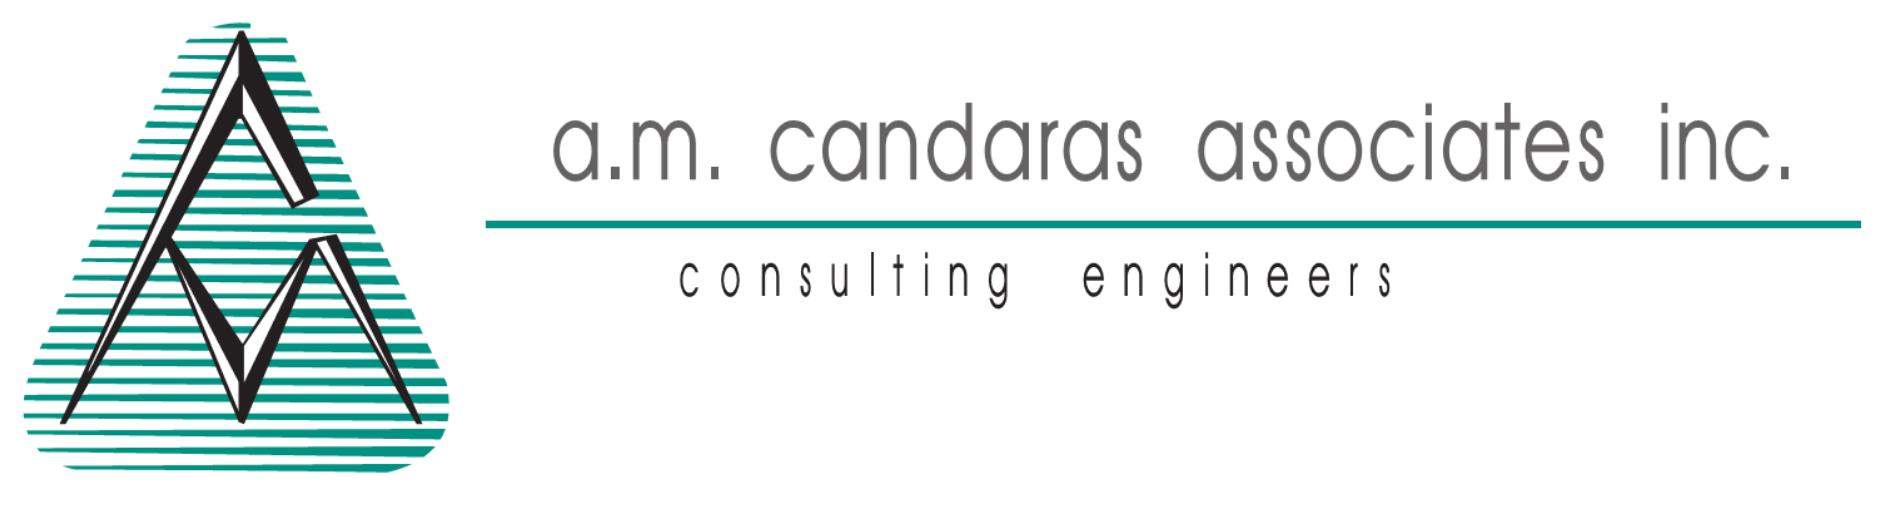 A.M. Candaras Associates logo